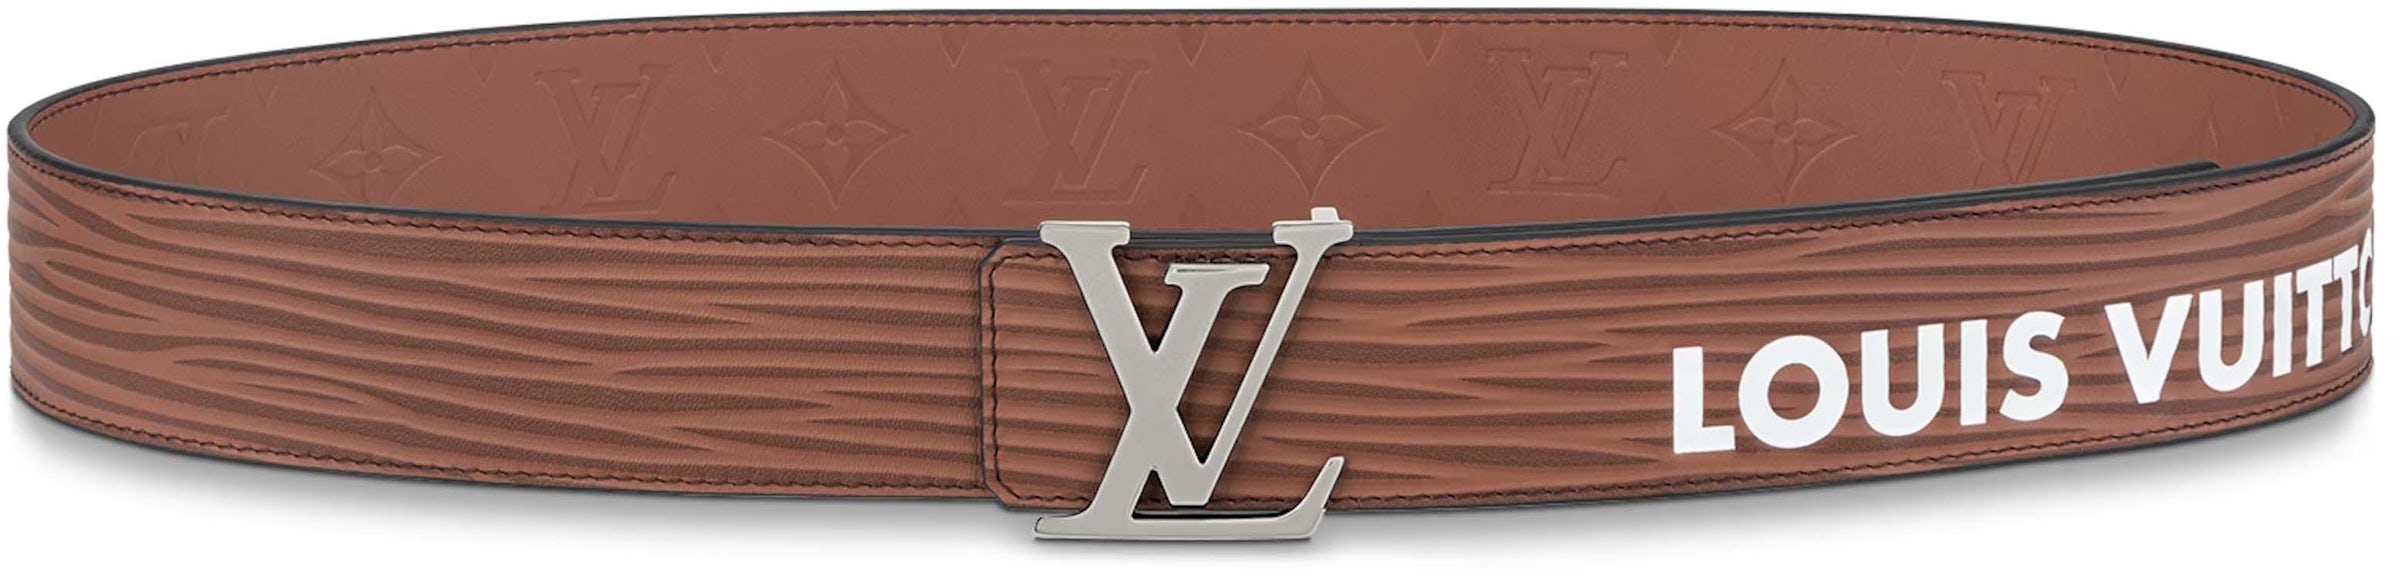 Louis Vuitton LV Initials 40mm Reversible Belt Tan Brown